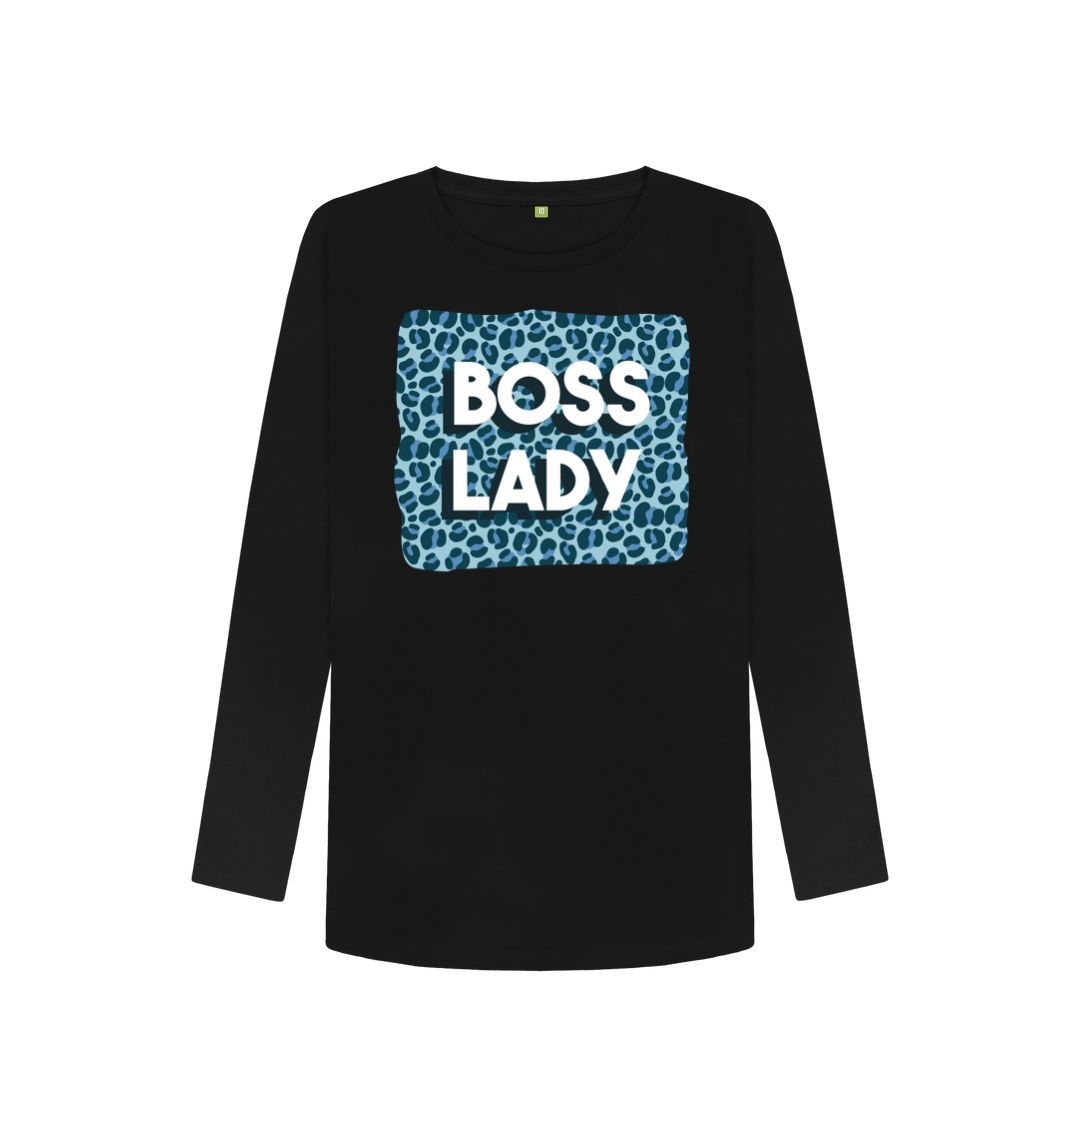 Black Boss Lady Women's Long Sleeve T-Shirt